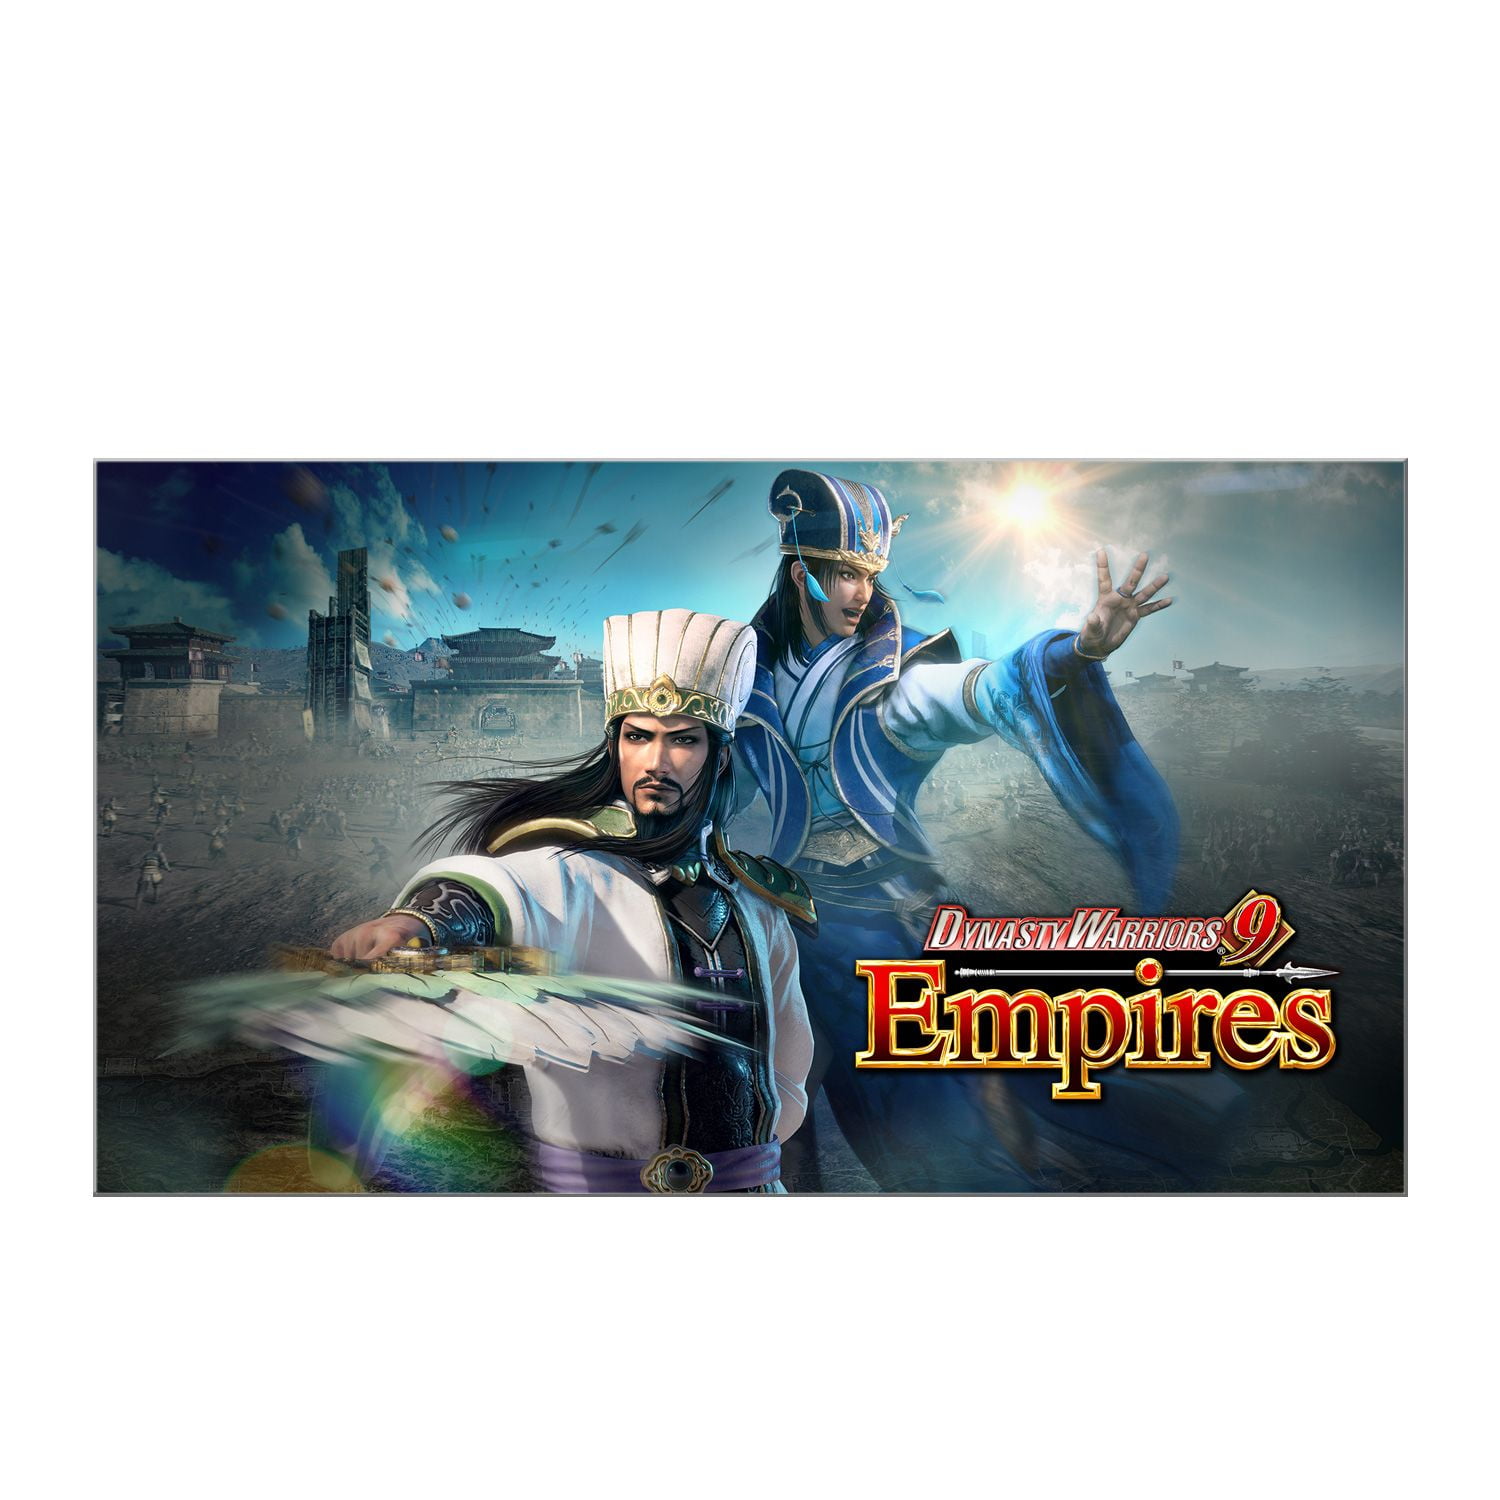 Jual Nintendo switch Dynasty warriors 9 empires - Jakarta Utara - Games 99  Shop